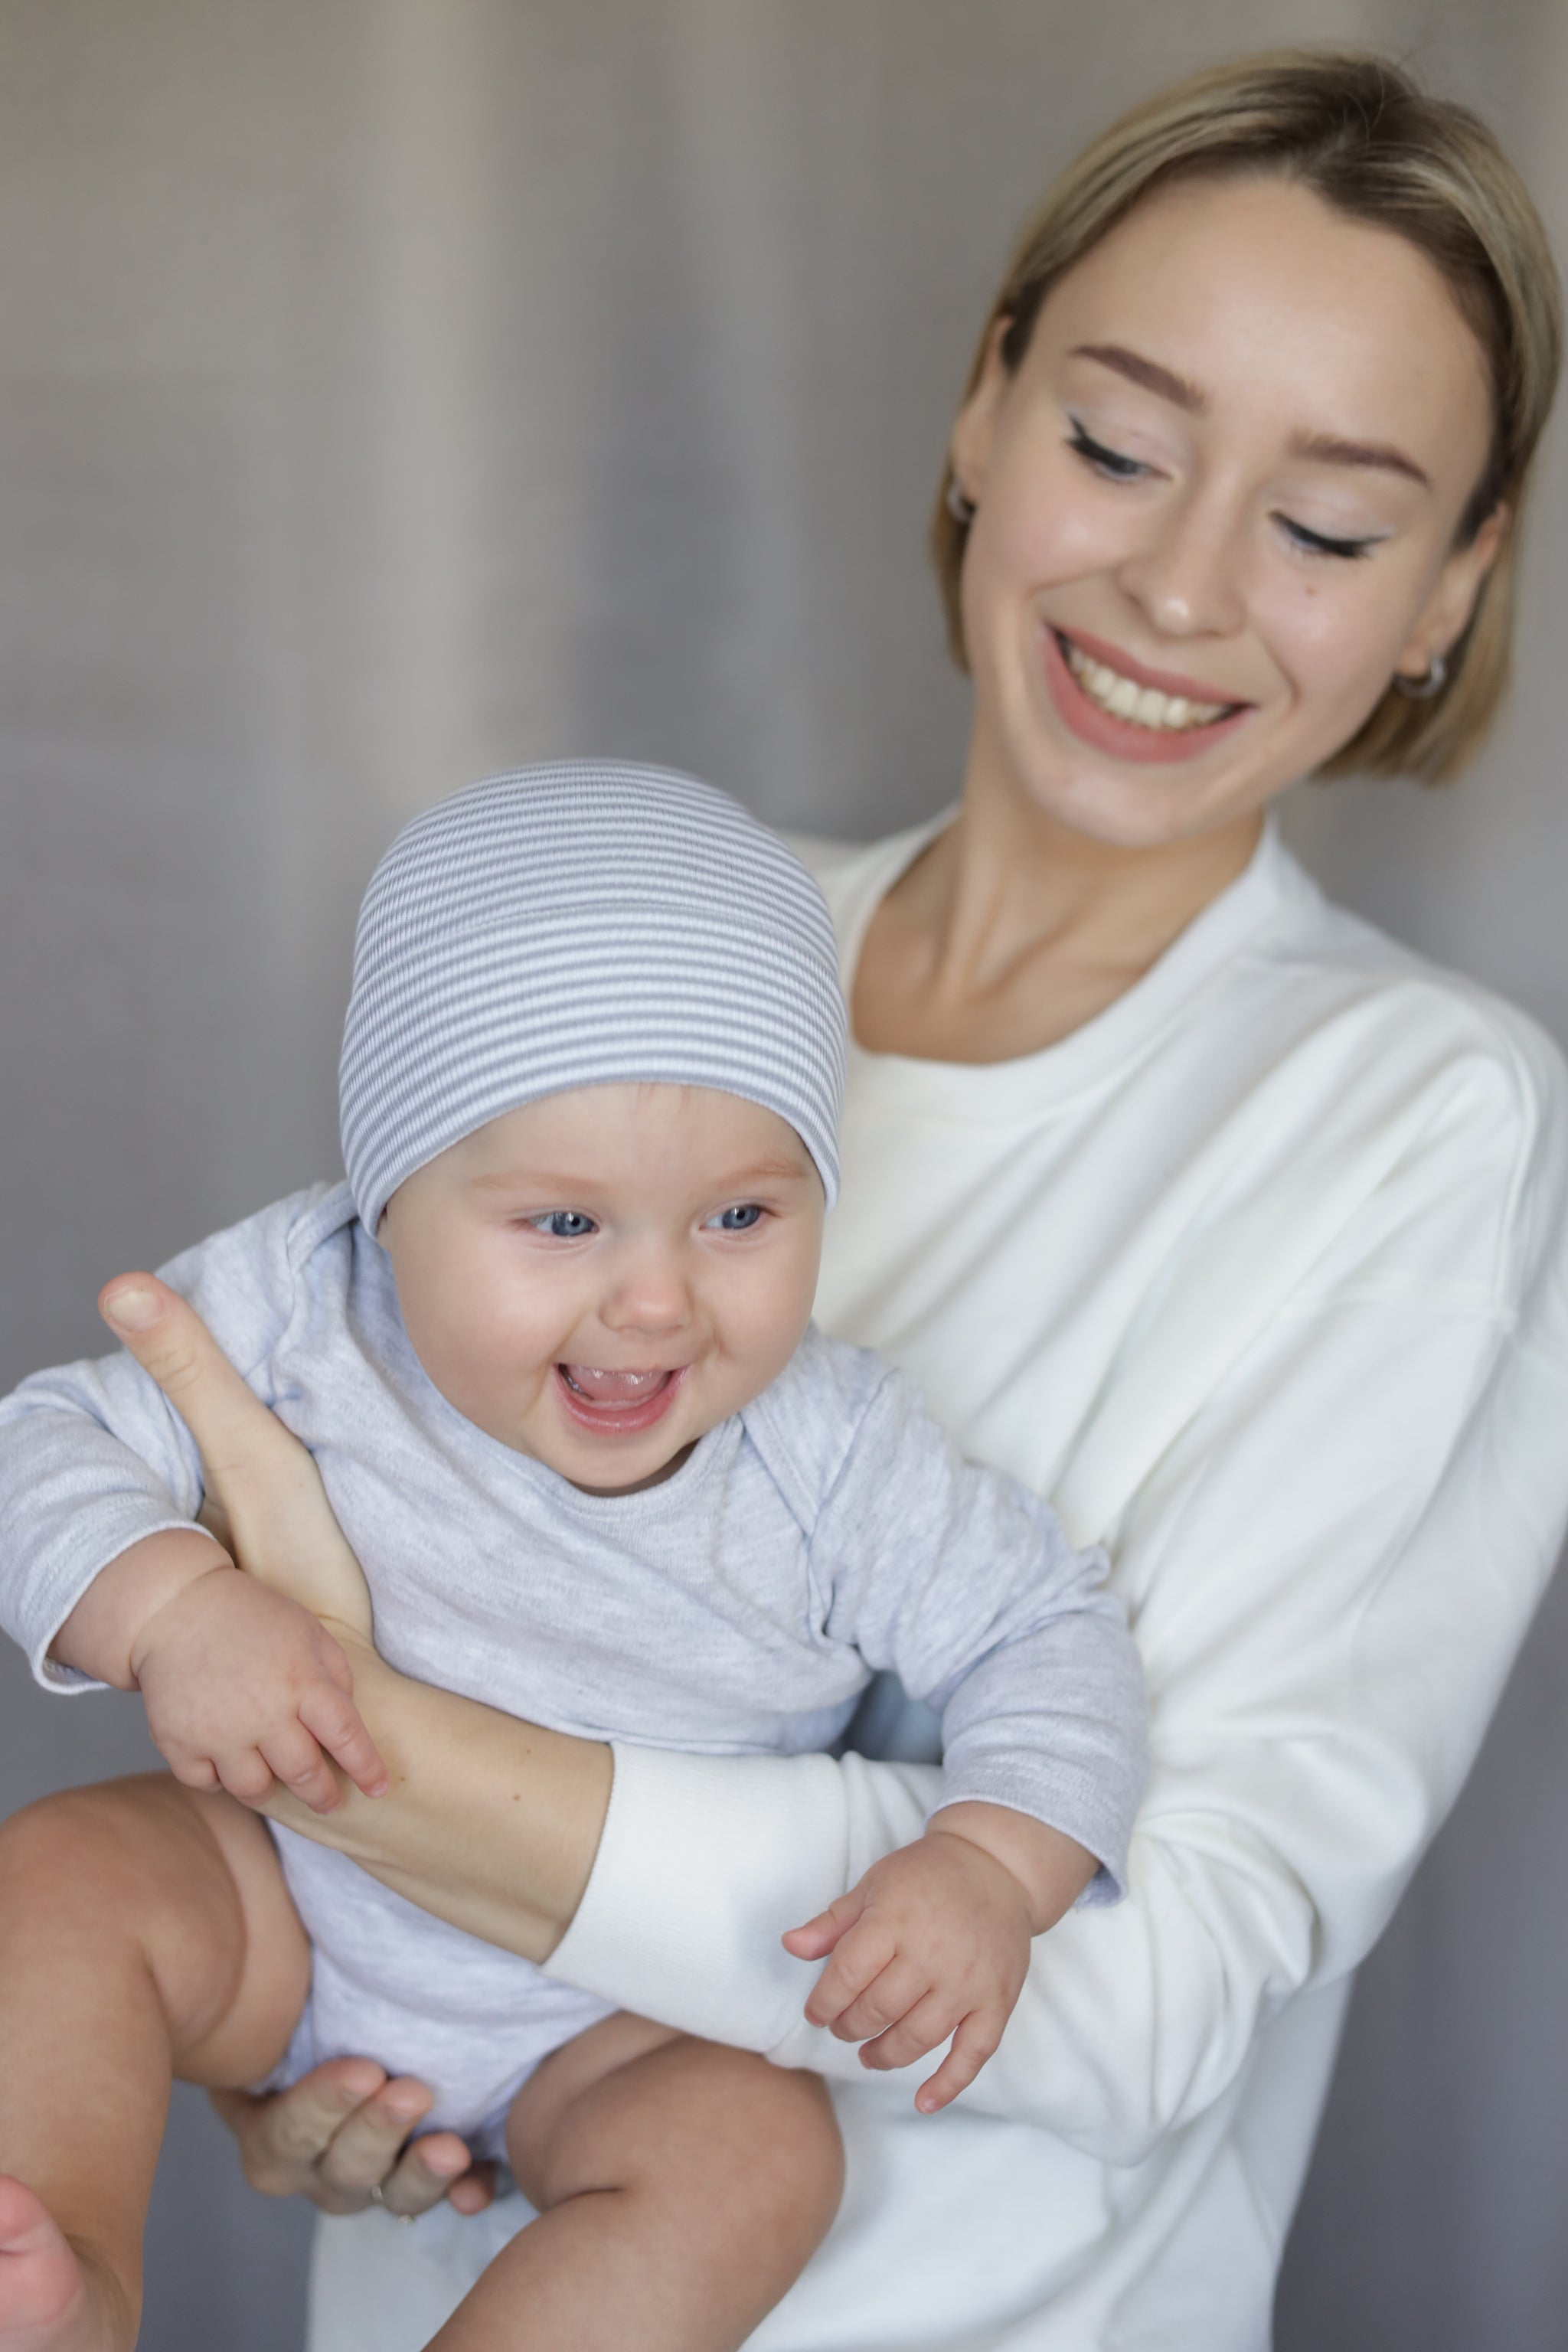 ilybean Gray & White Striped Newborn and Baby Boy Hospital Hat Newborn and 0-3 months size